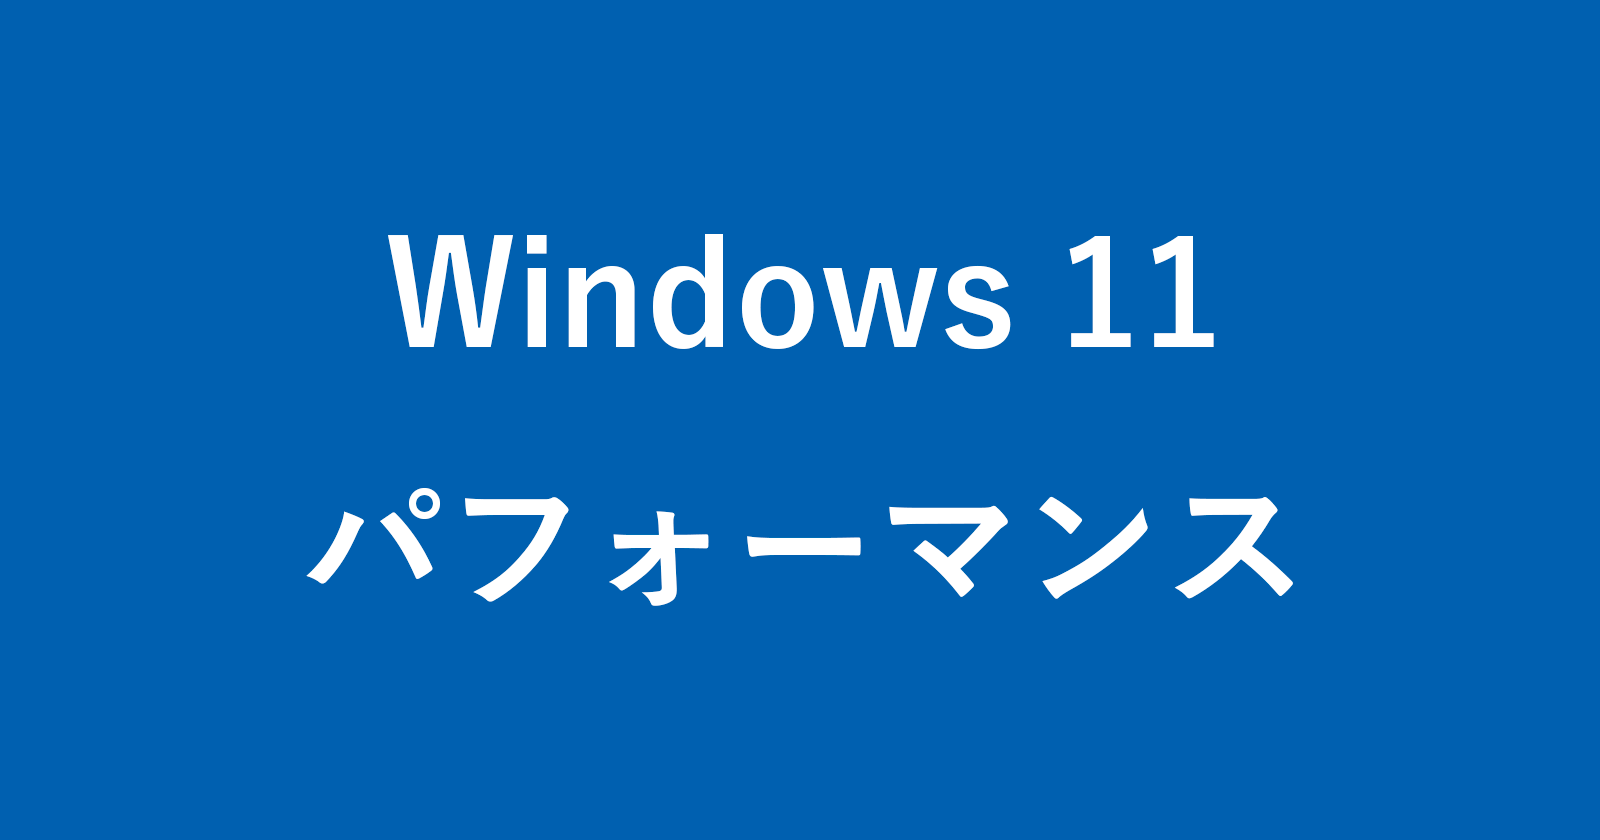 windows 11 performance